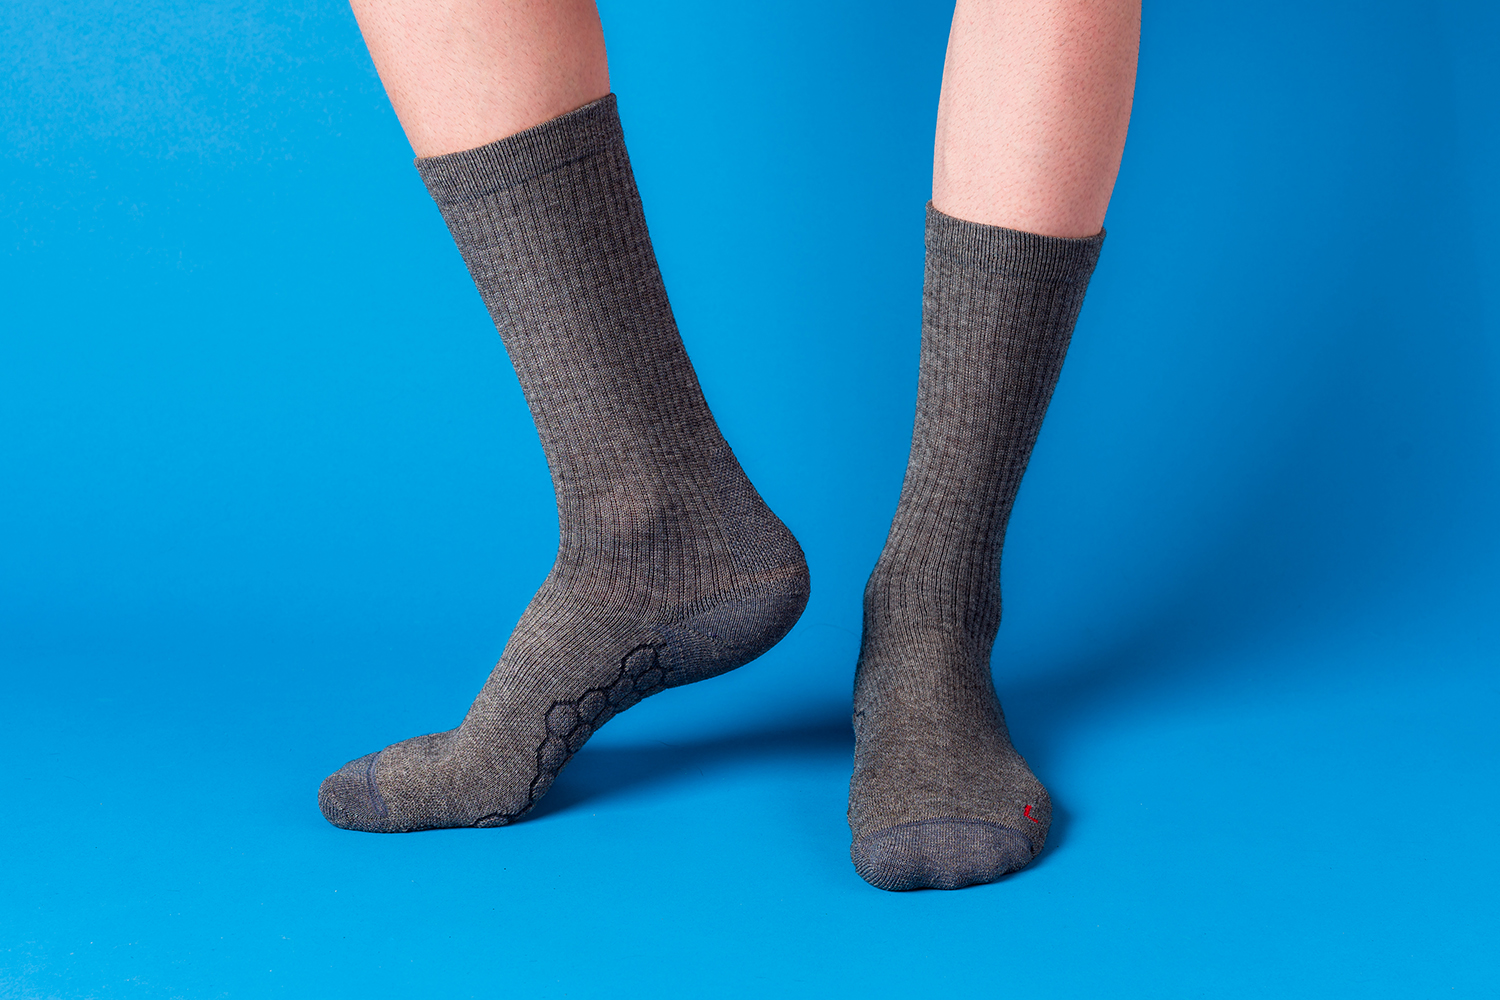 https://www.themanual.com/wp-content/uploads/sites/9/2019/07/neverquit-apparel-merino-wool-sock.jpg?p=1